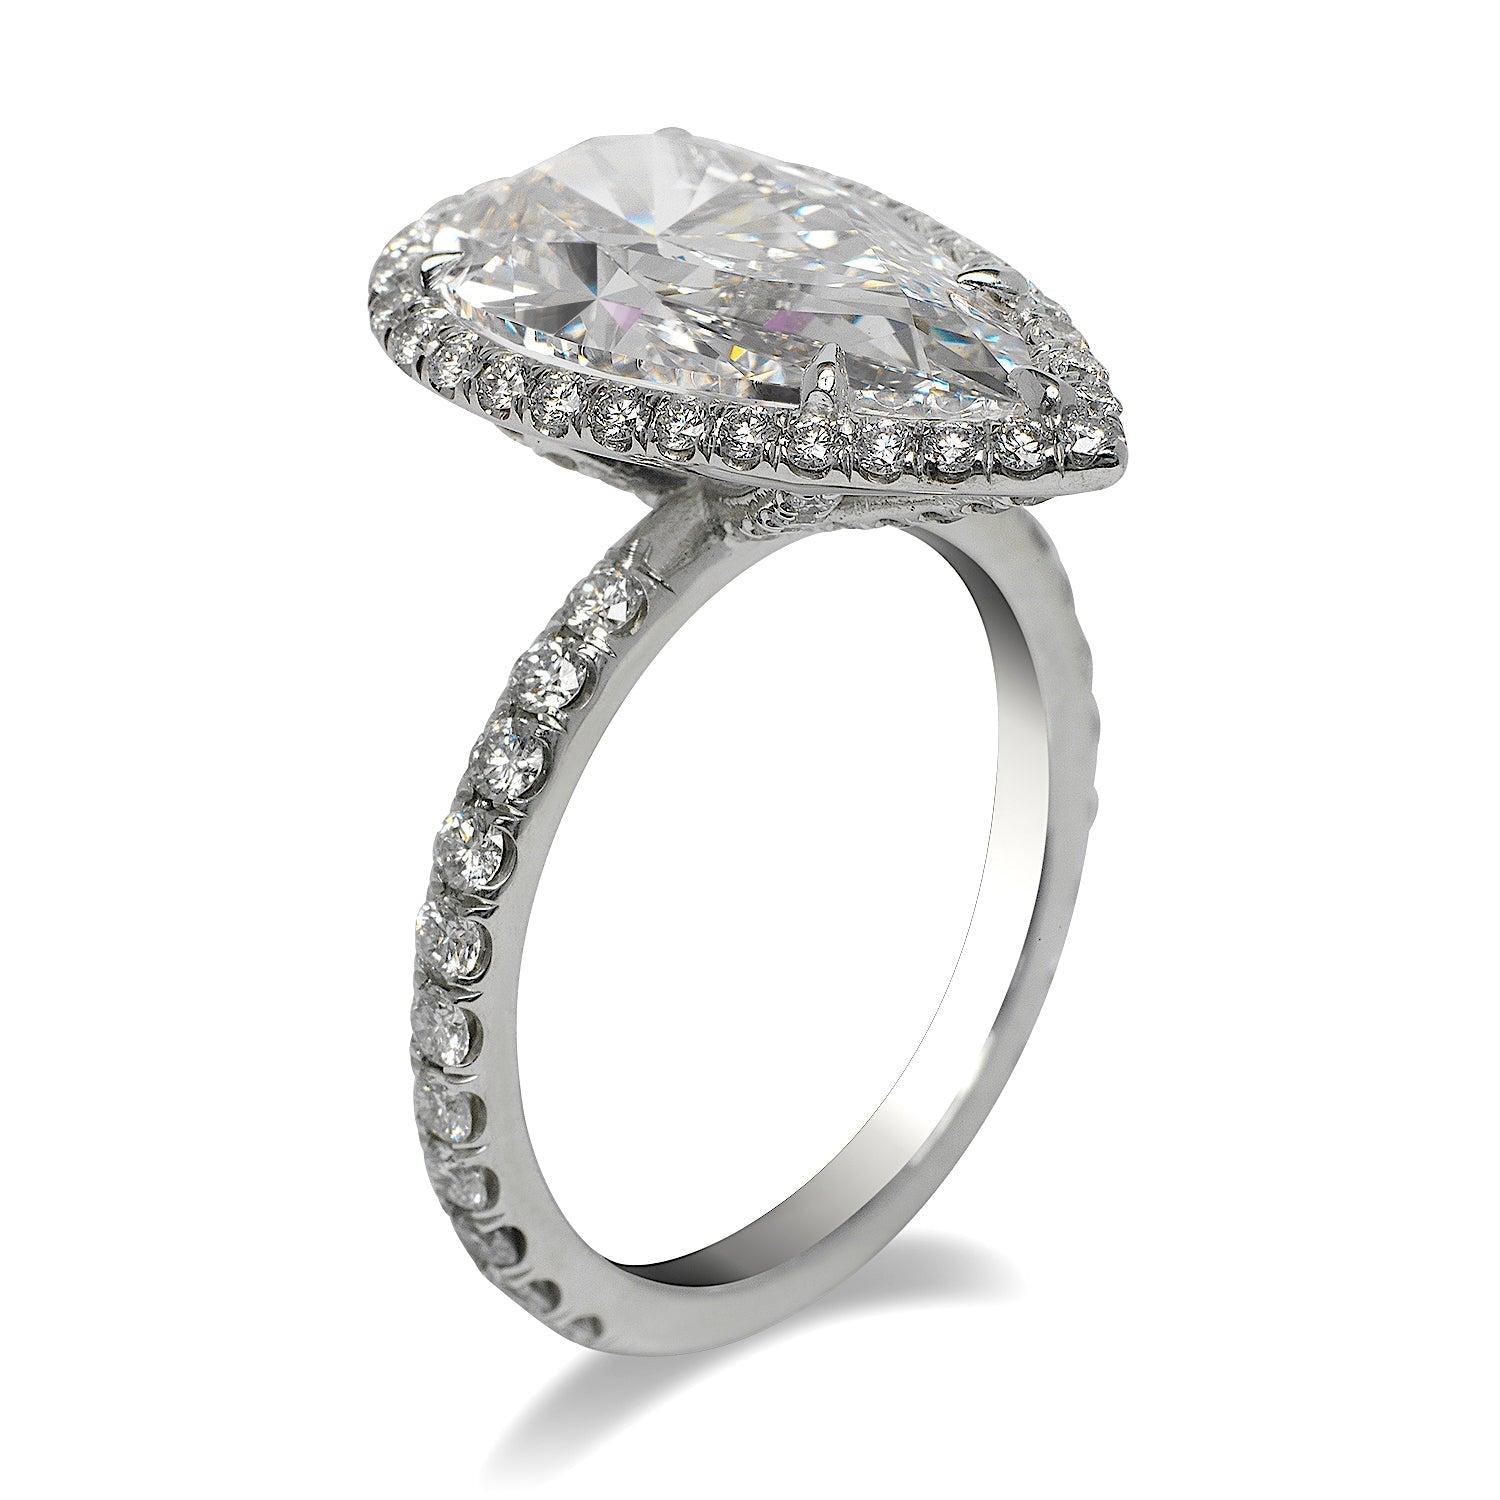 5 carat pear shaped diamond ring